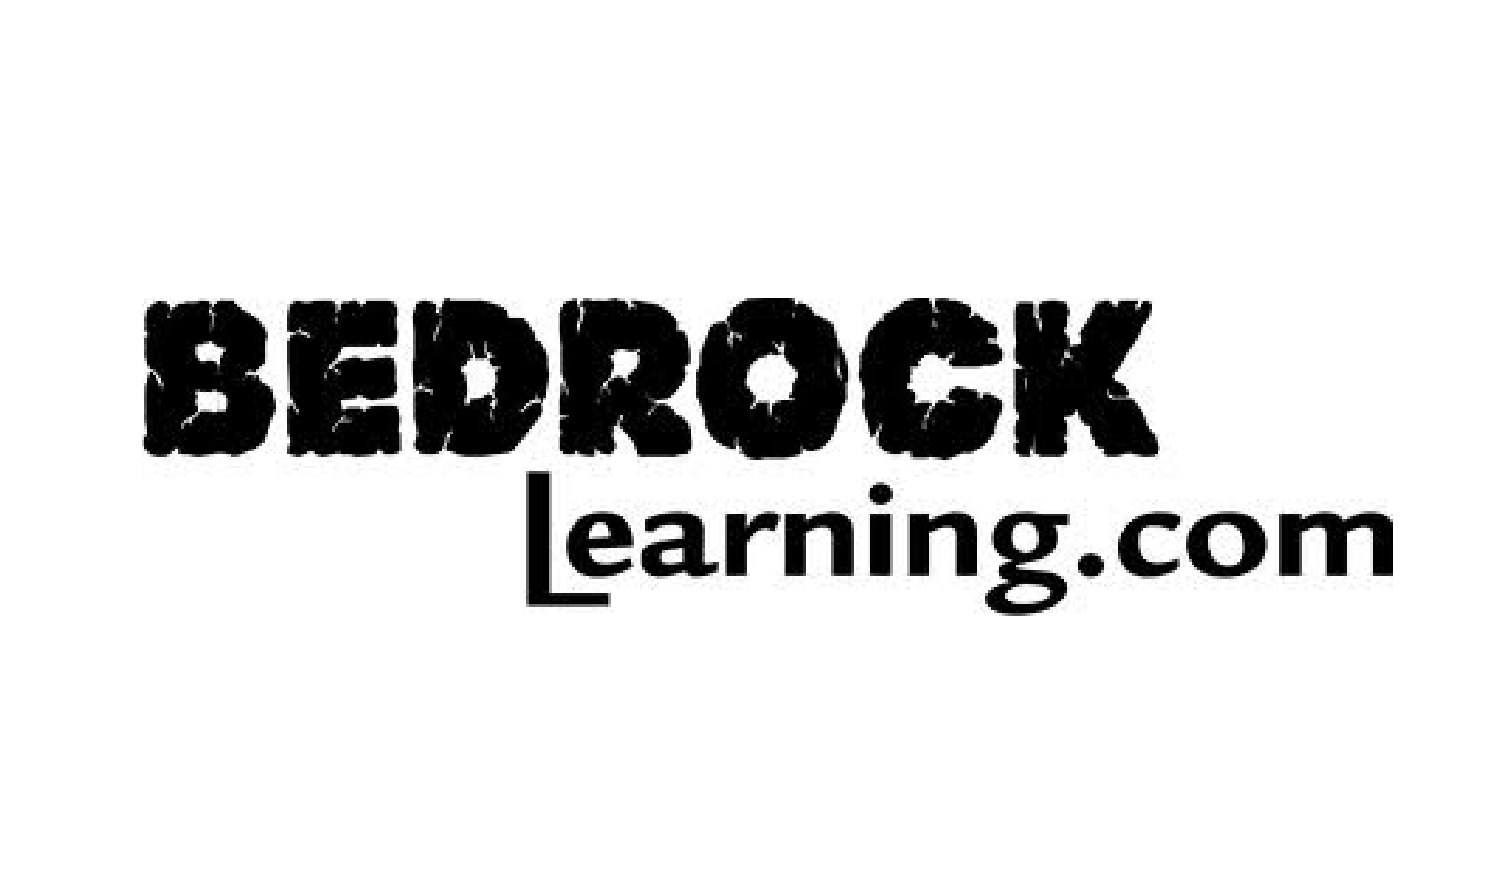 Bedrock sponsor logo